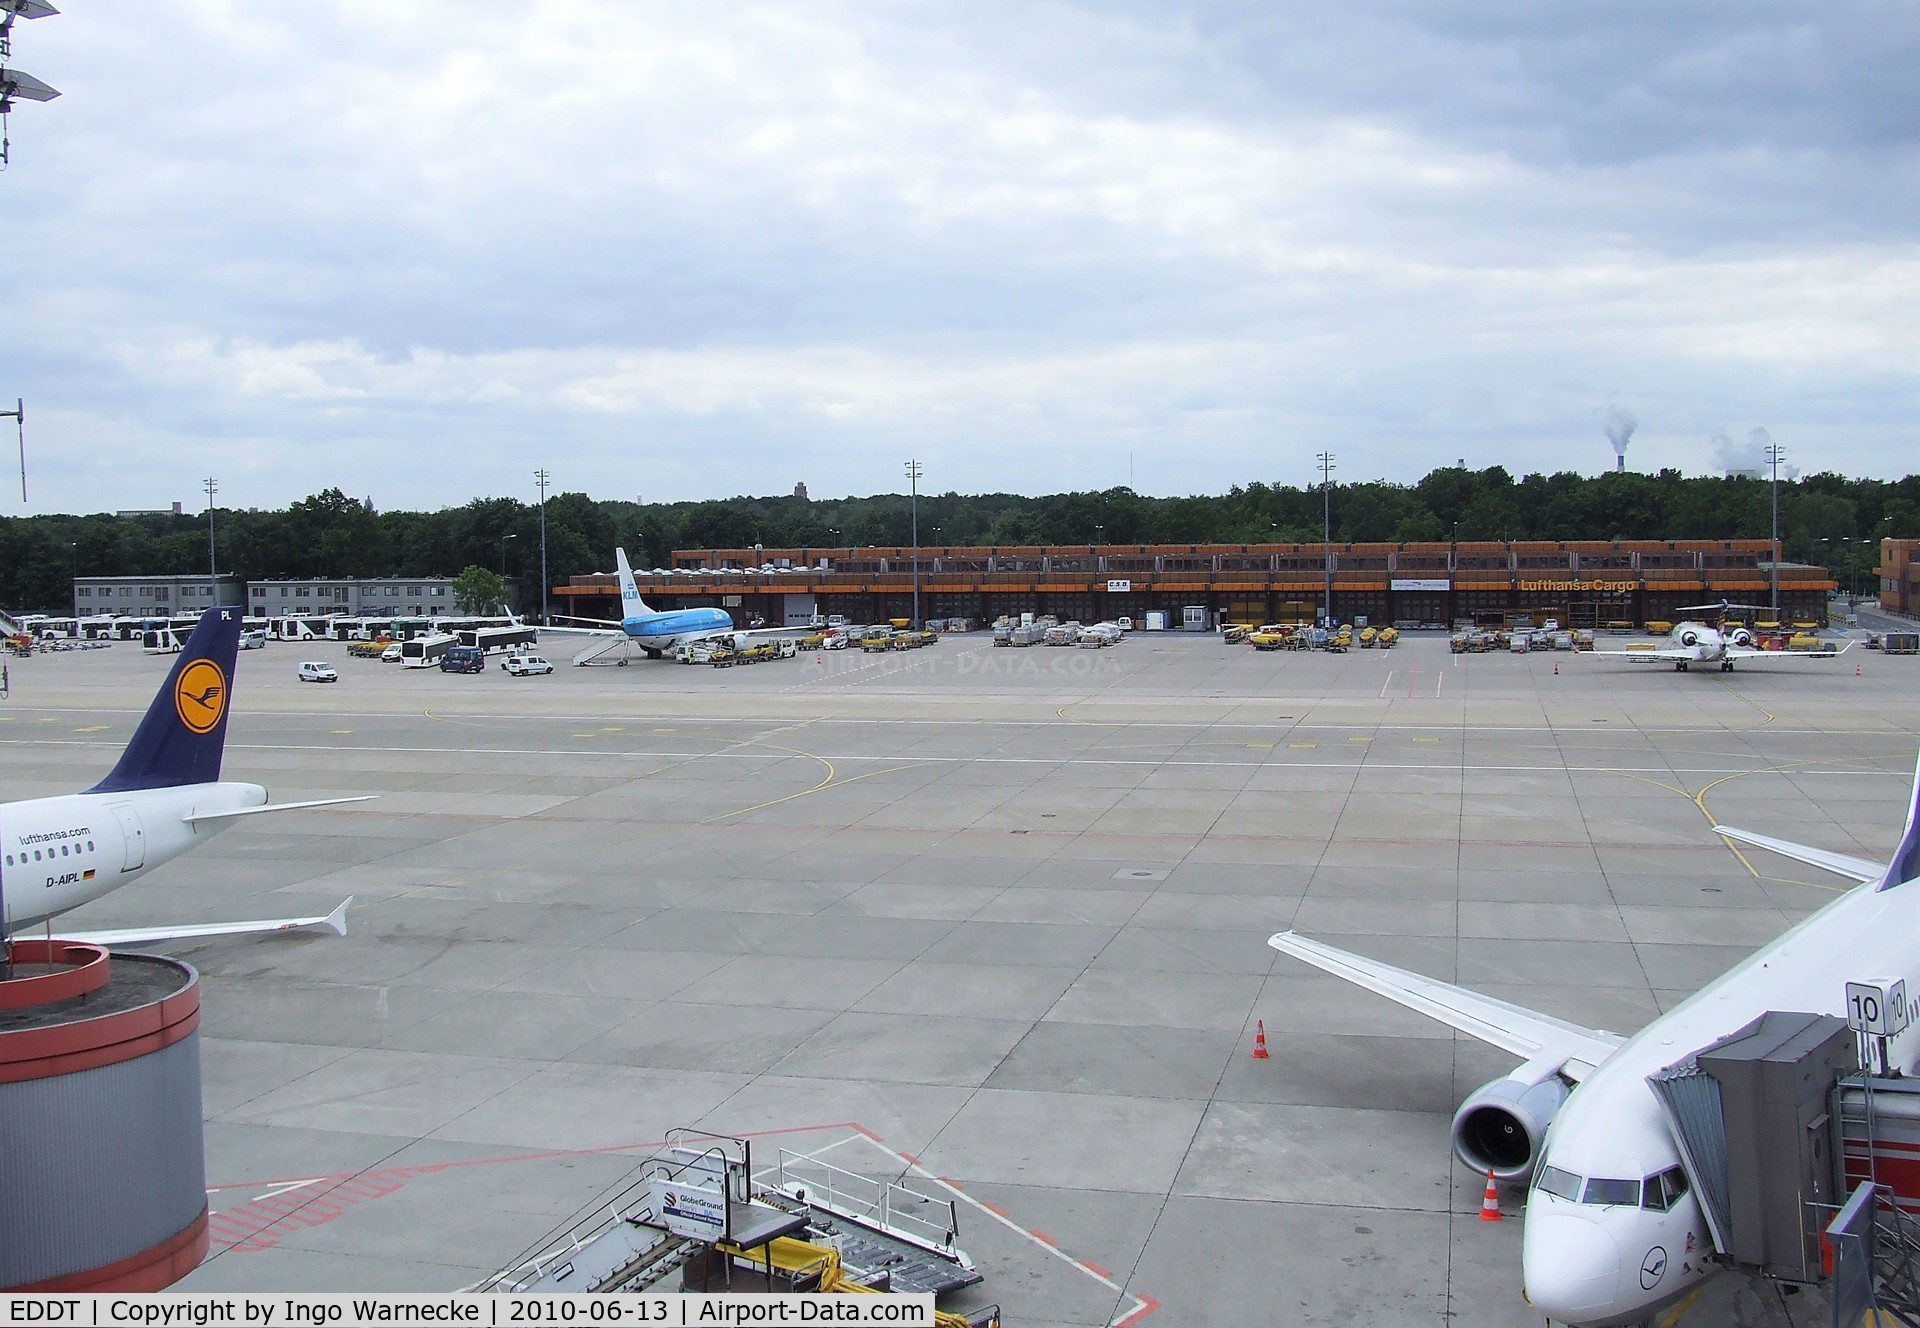 Tegel International Airport (closing in 2011), Berlin Germany (EDDT) - apron at Berlin Tegel airport